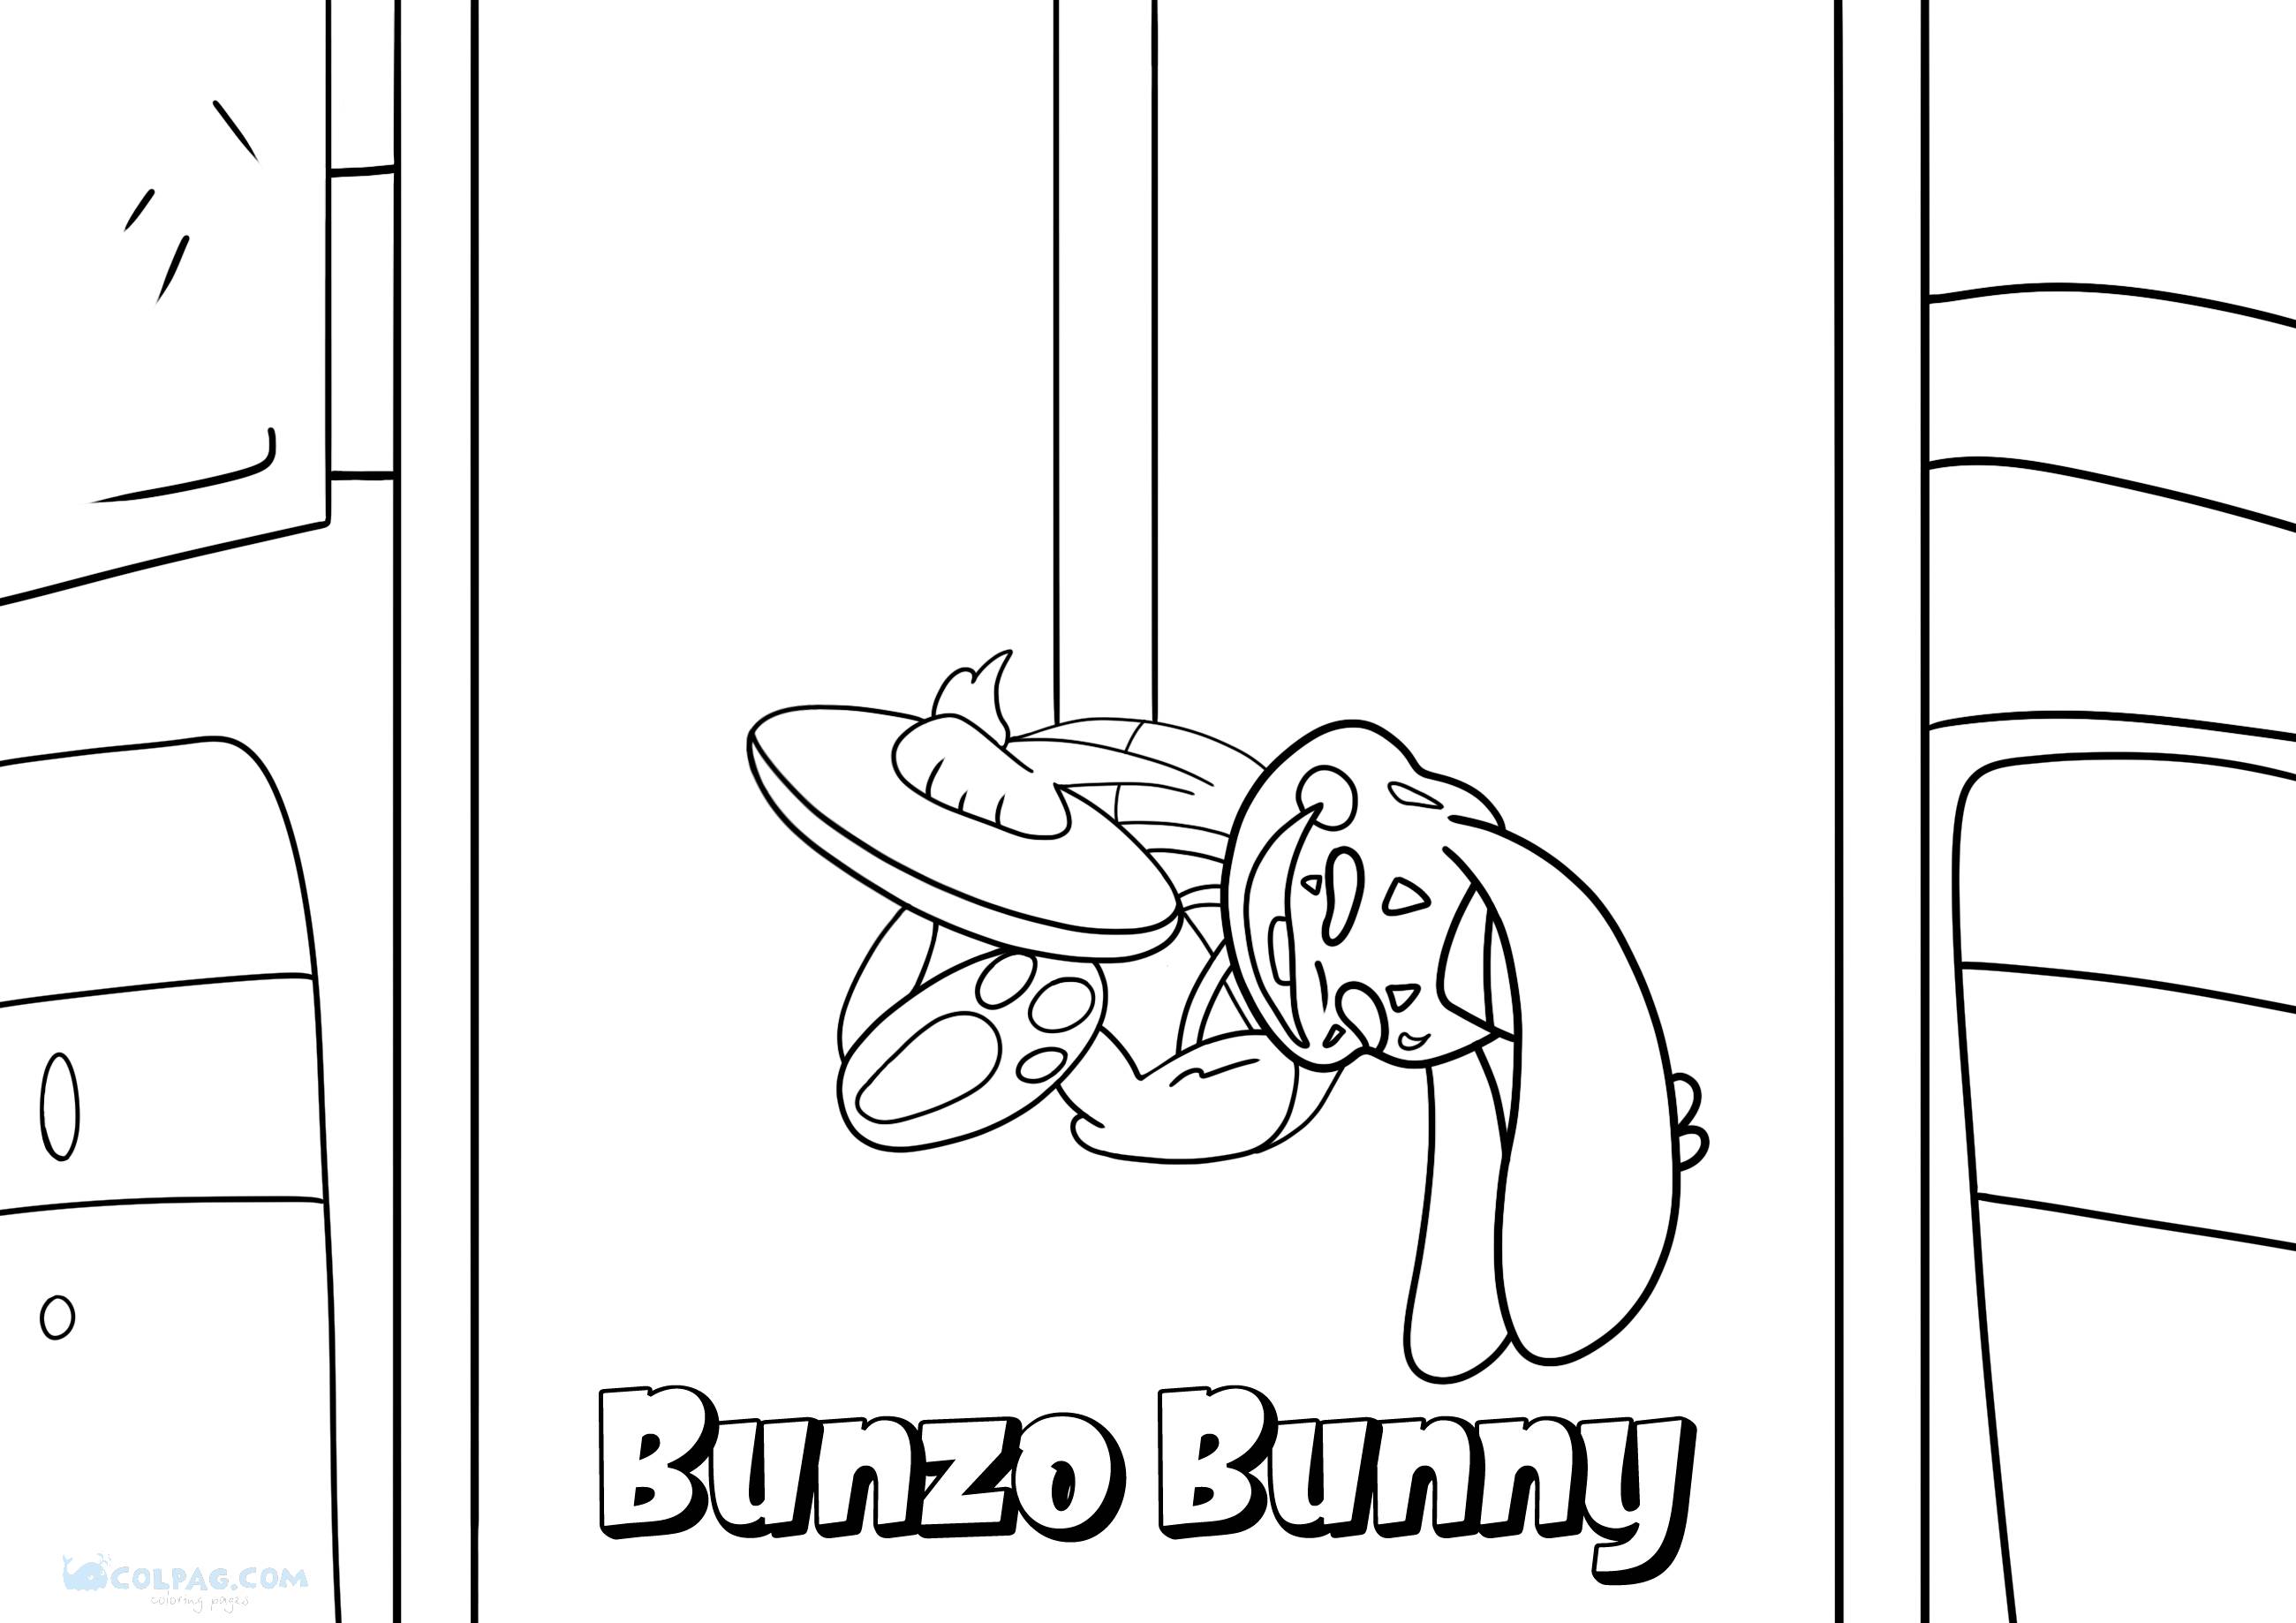 bunzo-bunny-coloring-page-colpag-com-1